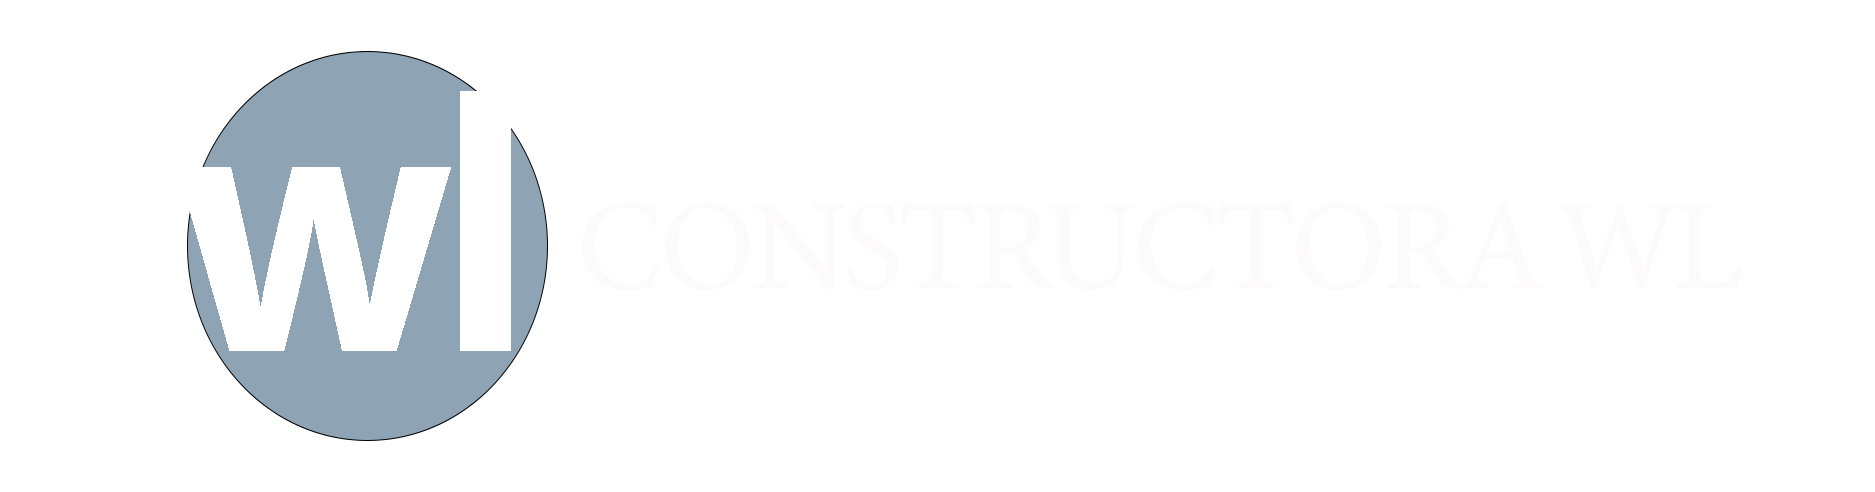 https://constructorawl.cl/wp-content/uploads/2021/10/logo2021-copia.png